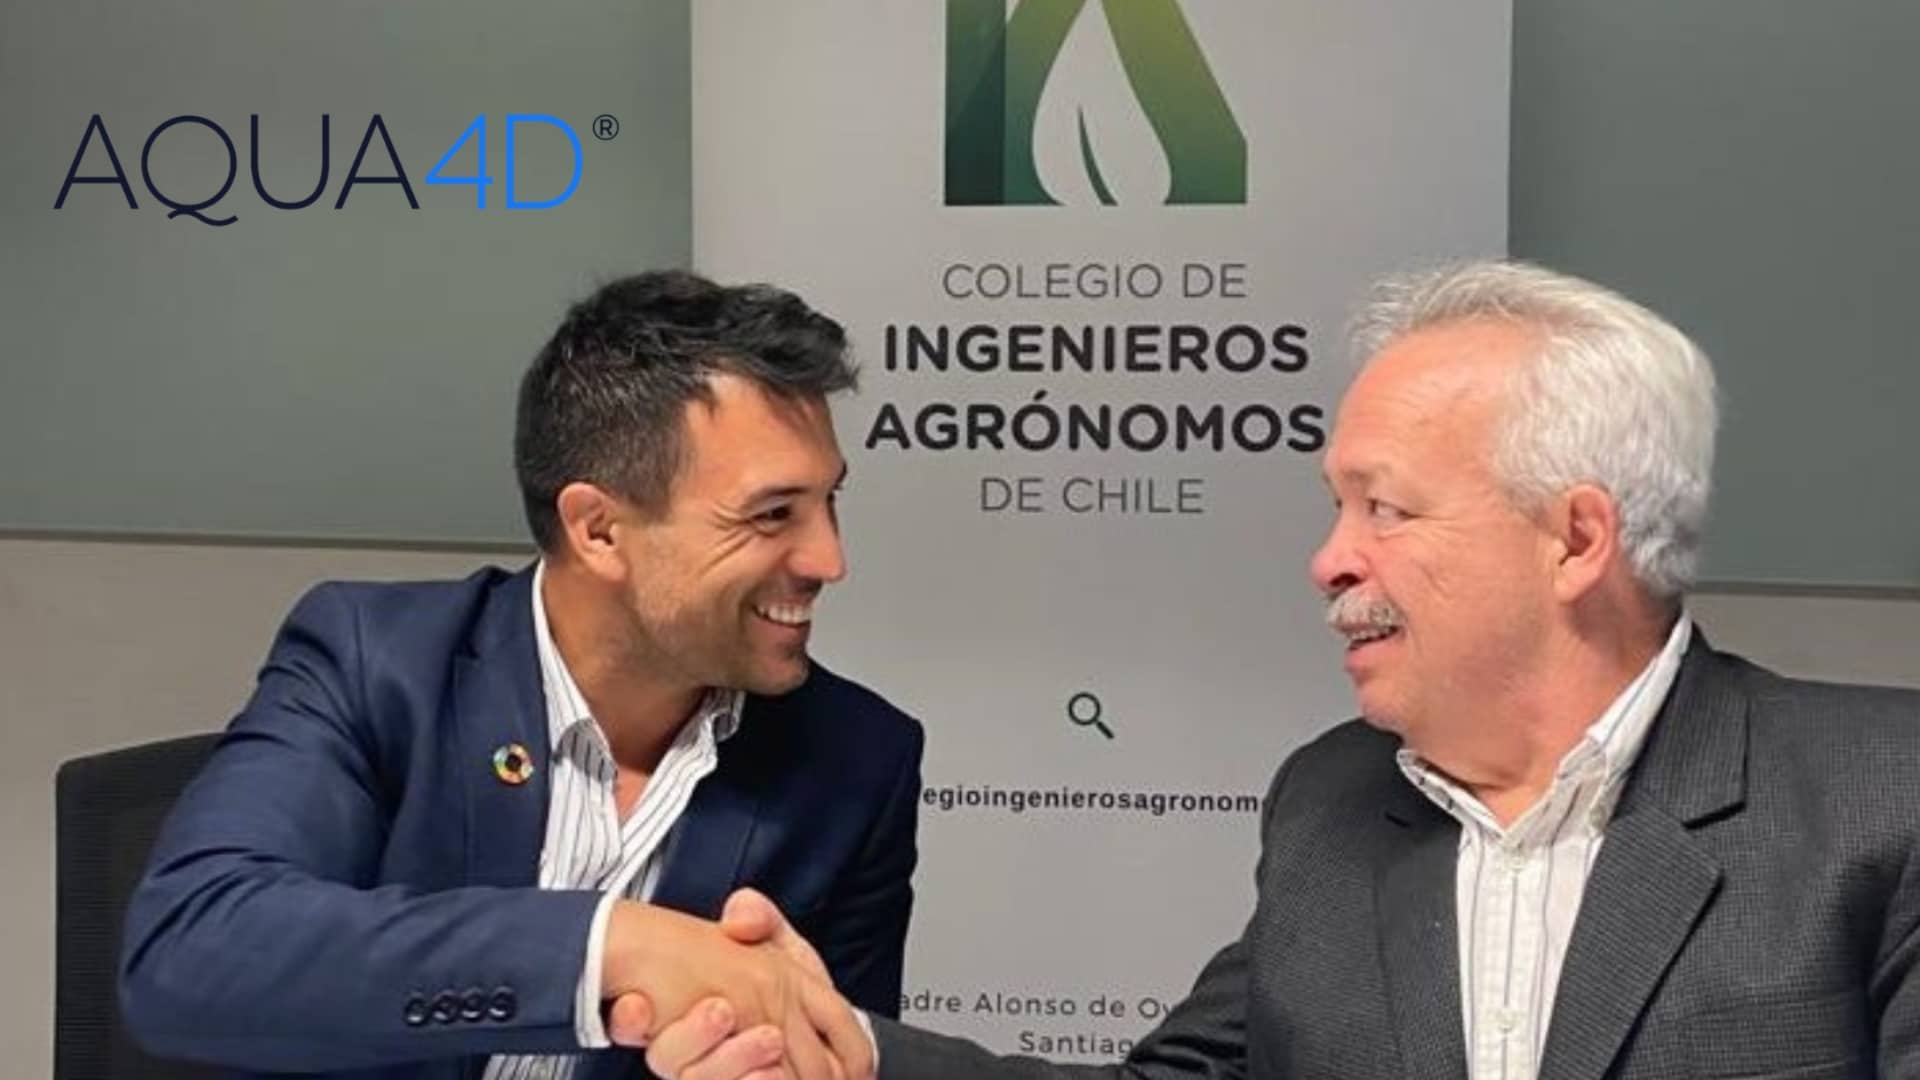 academic agreement aqua4d in chile